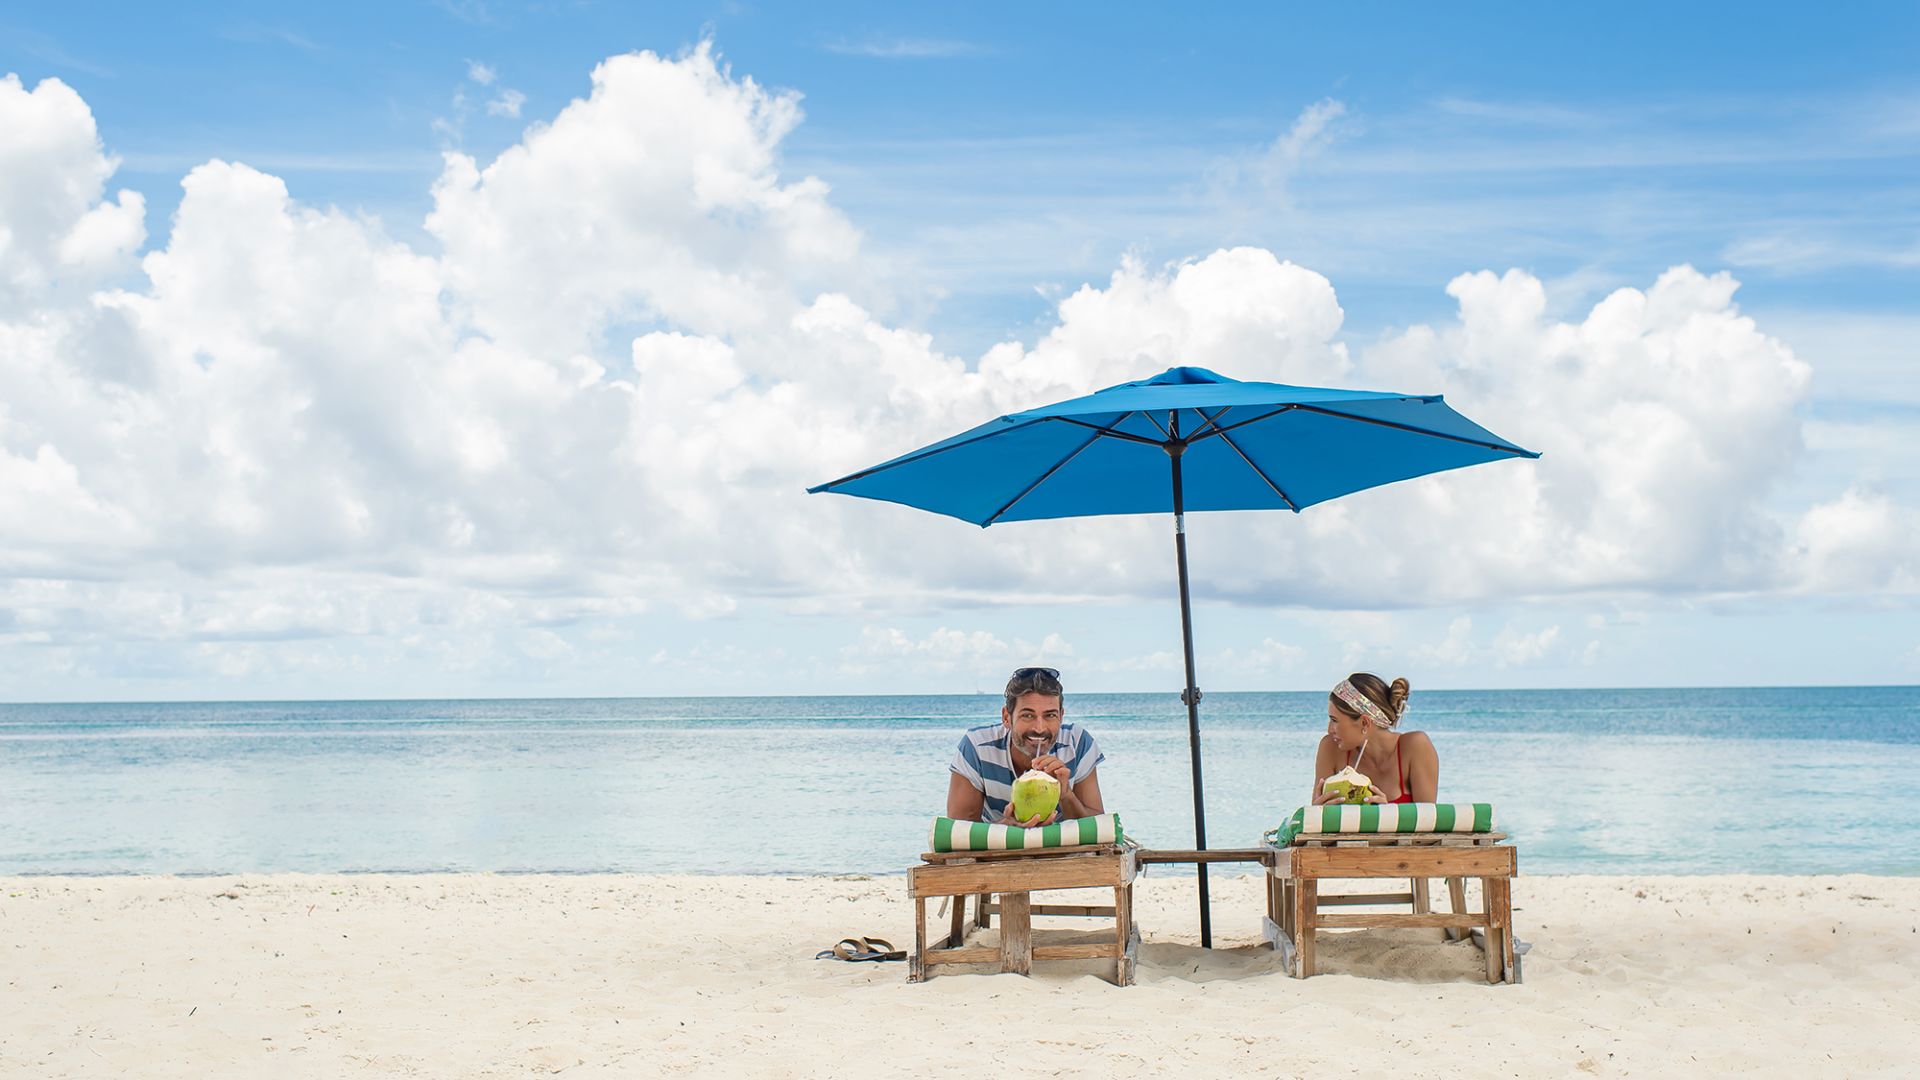 Neil Malik Abdullah Et Al. Sit Under An Umbrella On A Beach